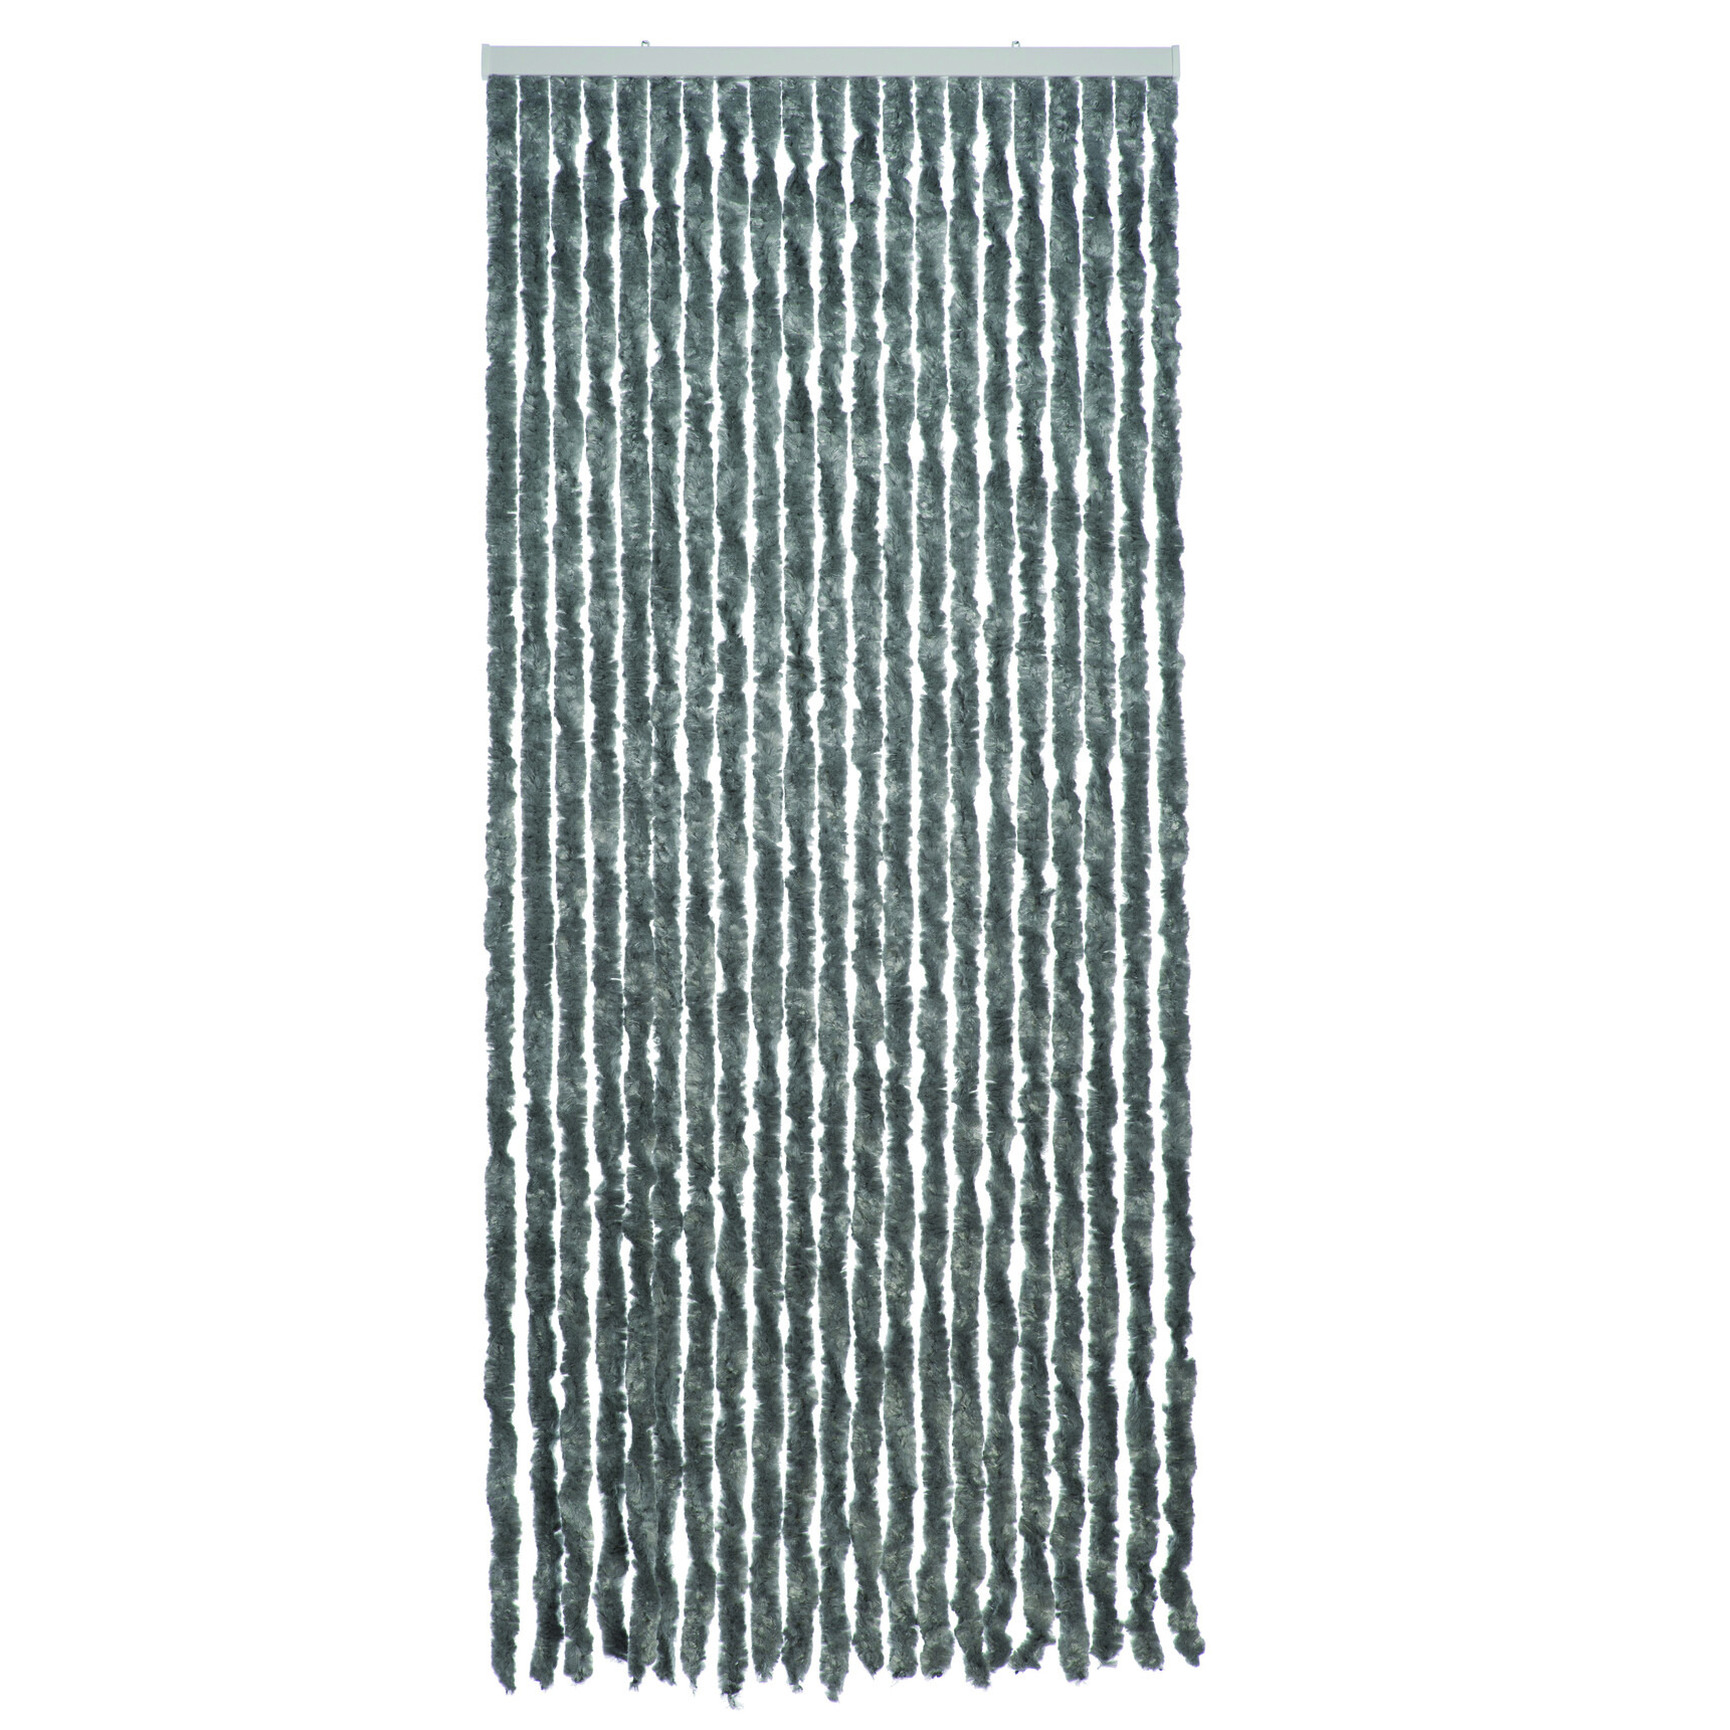 Ambiance Lichtgrijs polyester stroken vliegen/insecten gordijn 93 x 210 cm -